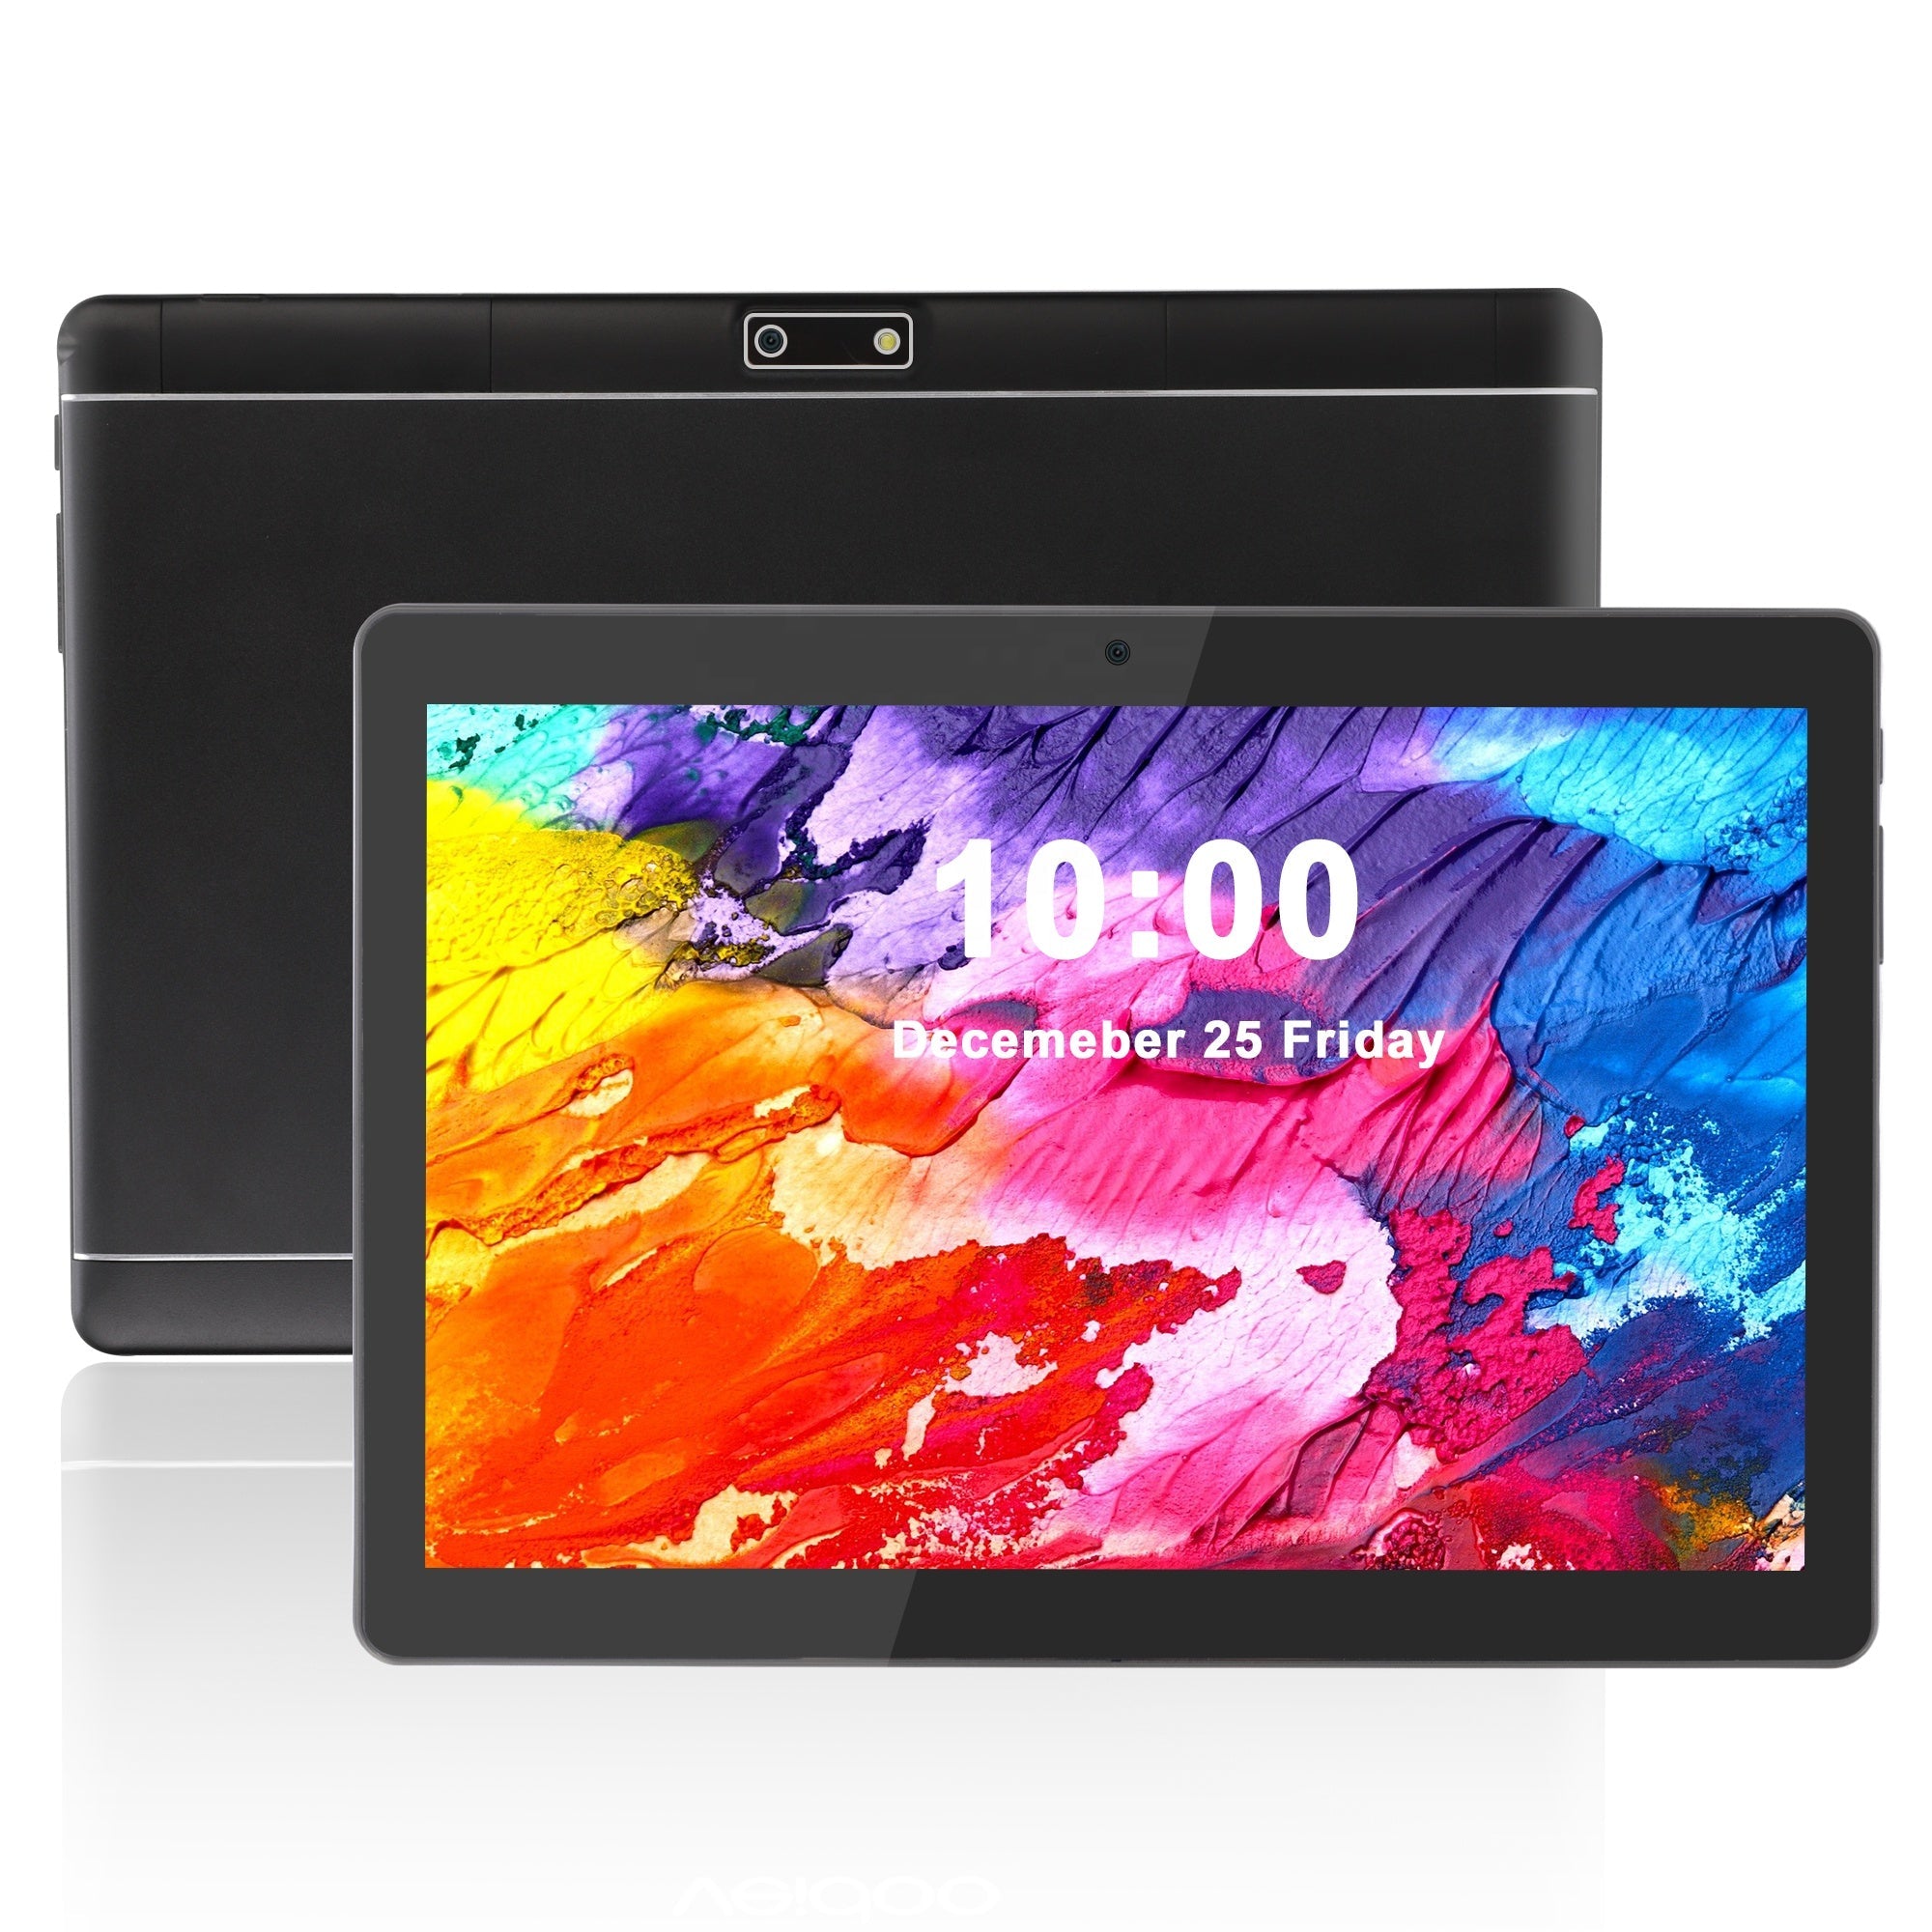 Veidoo Android Tablet 10 inch 32GB Tablets Computer 10.1 inches IPS HD Display WiFi 3G SIM Card Slot GPS 10